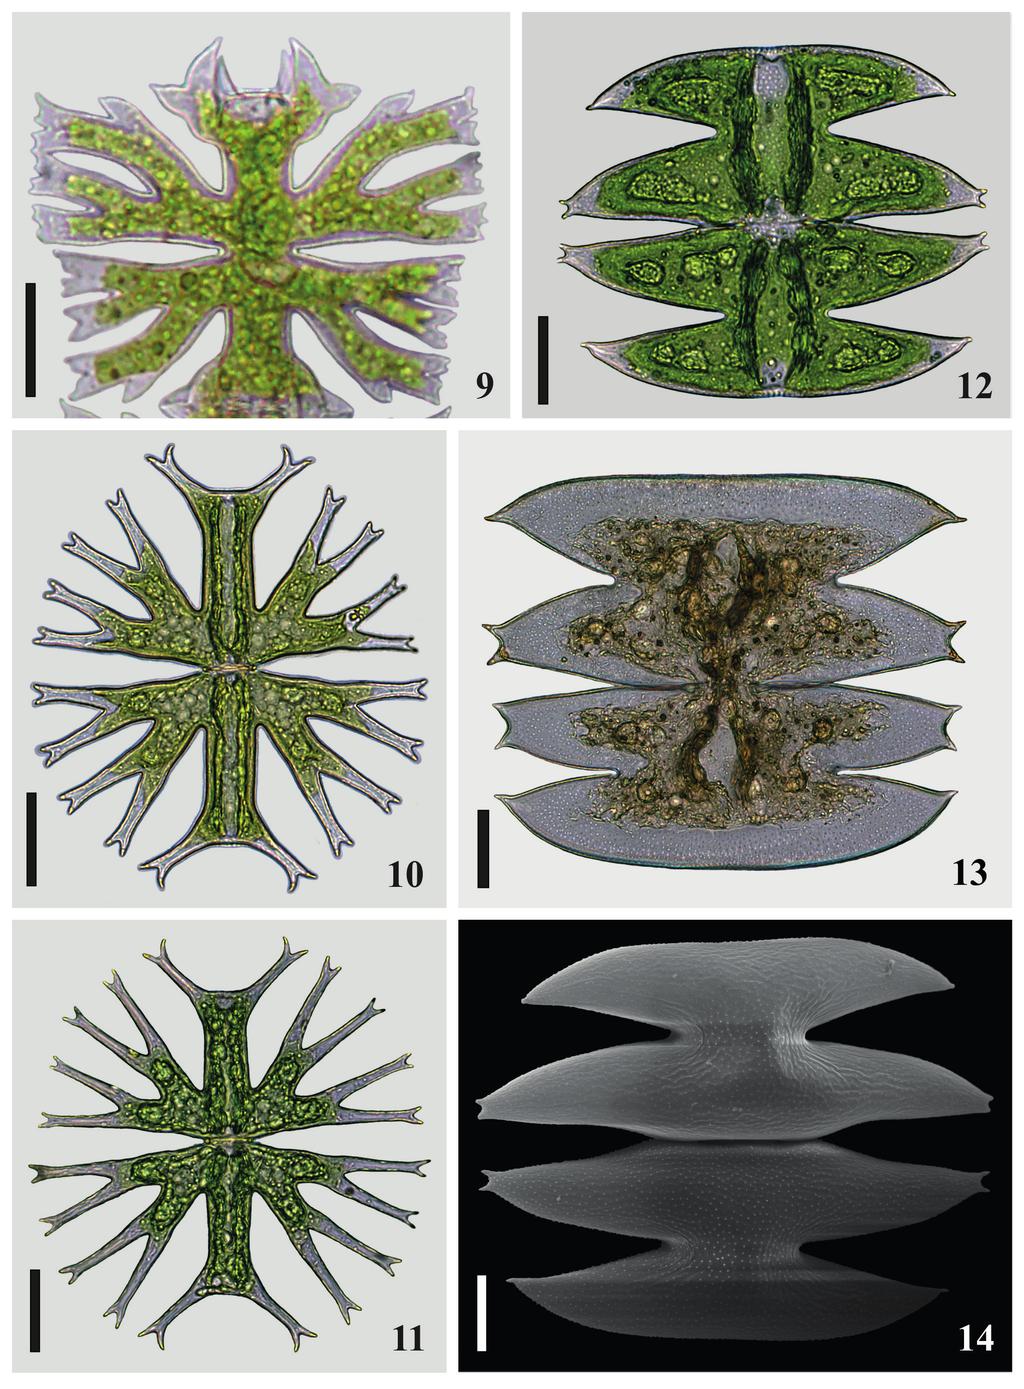 304 Santos et al. Figs. 9-14. 9. Micrasterias foliacea var. foliácea. detalhe da célula; 10. M. furcata var. furcata; 11. M. furcata var. dichotoma; 12-14.